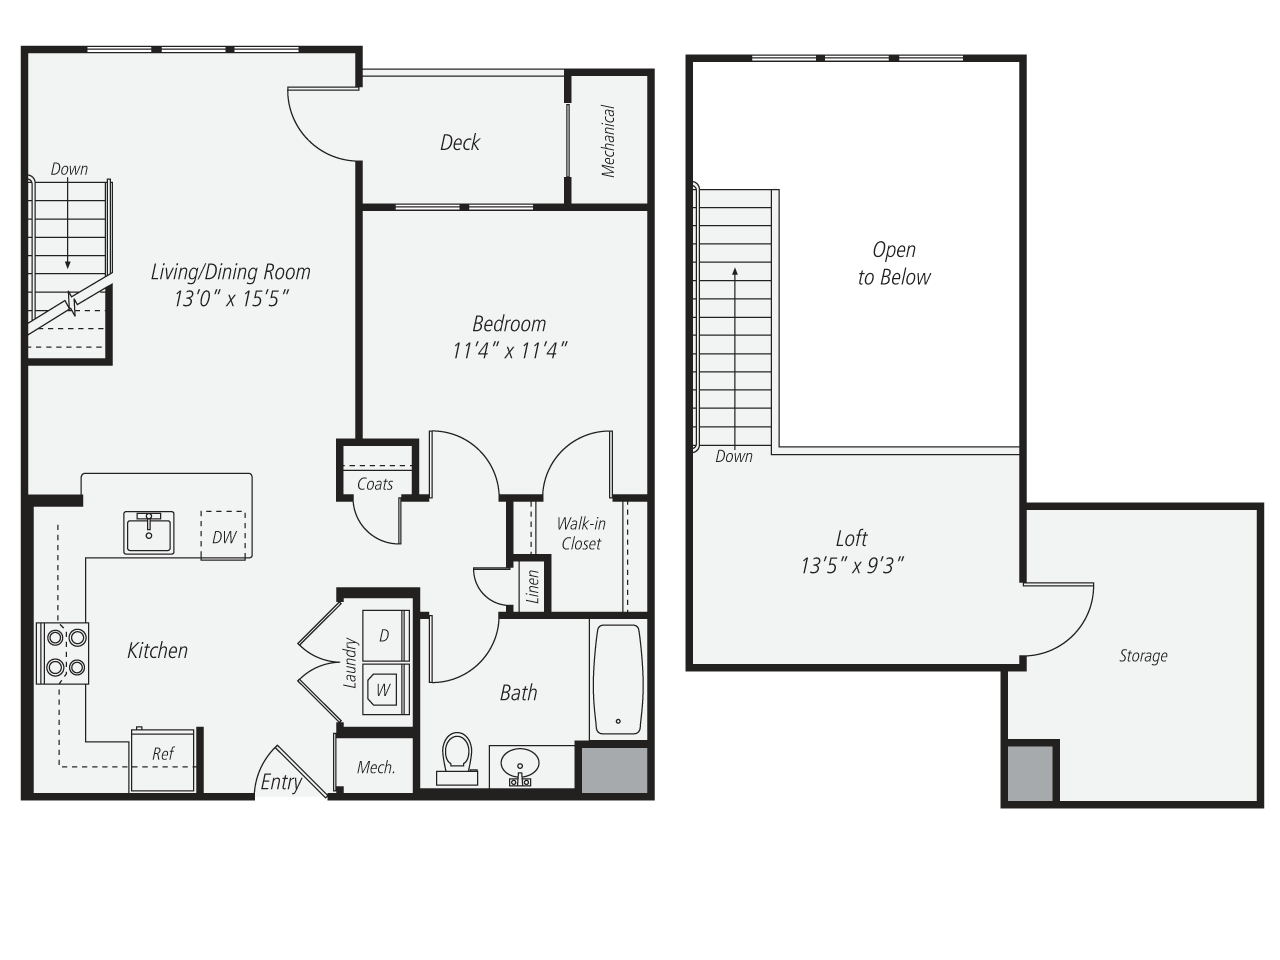 Floorplan for Apartment #418, 1 bedroom unit at Halstead Norwalk